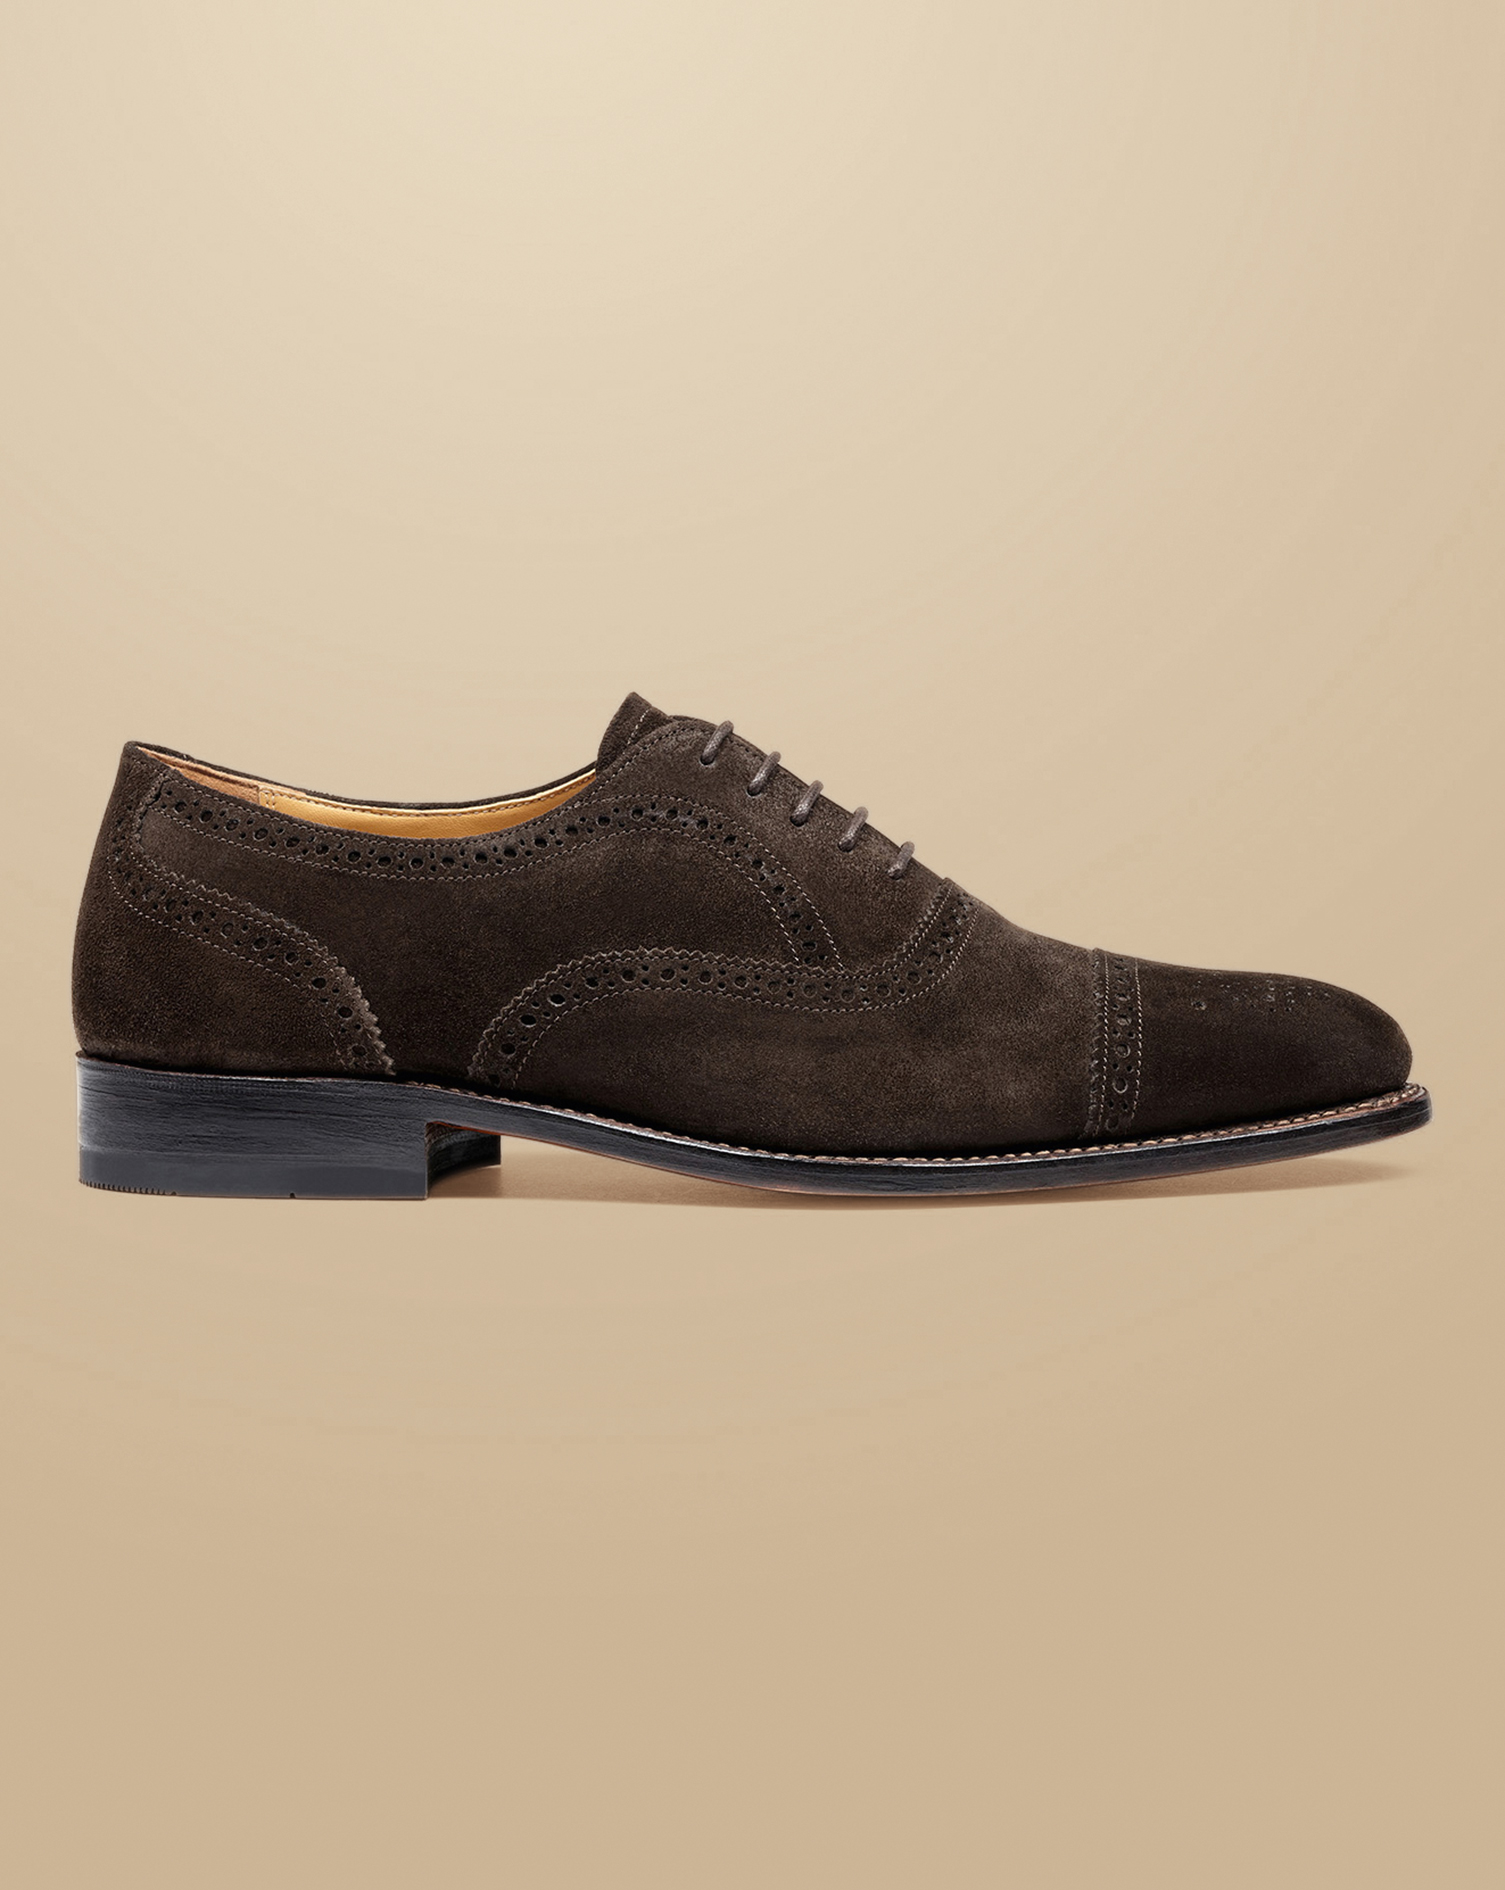 Men's Charles Tyrwhitt Oxford Brogue Shoes - Dark Chocolate Brown Size 10 Suede
